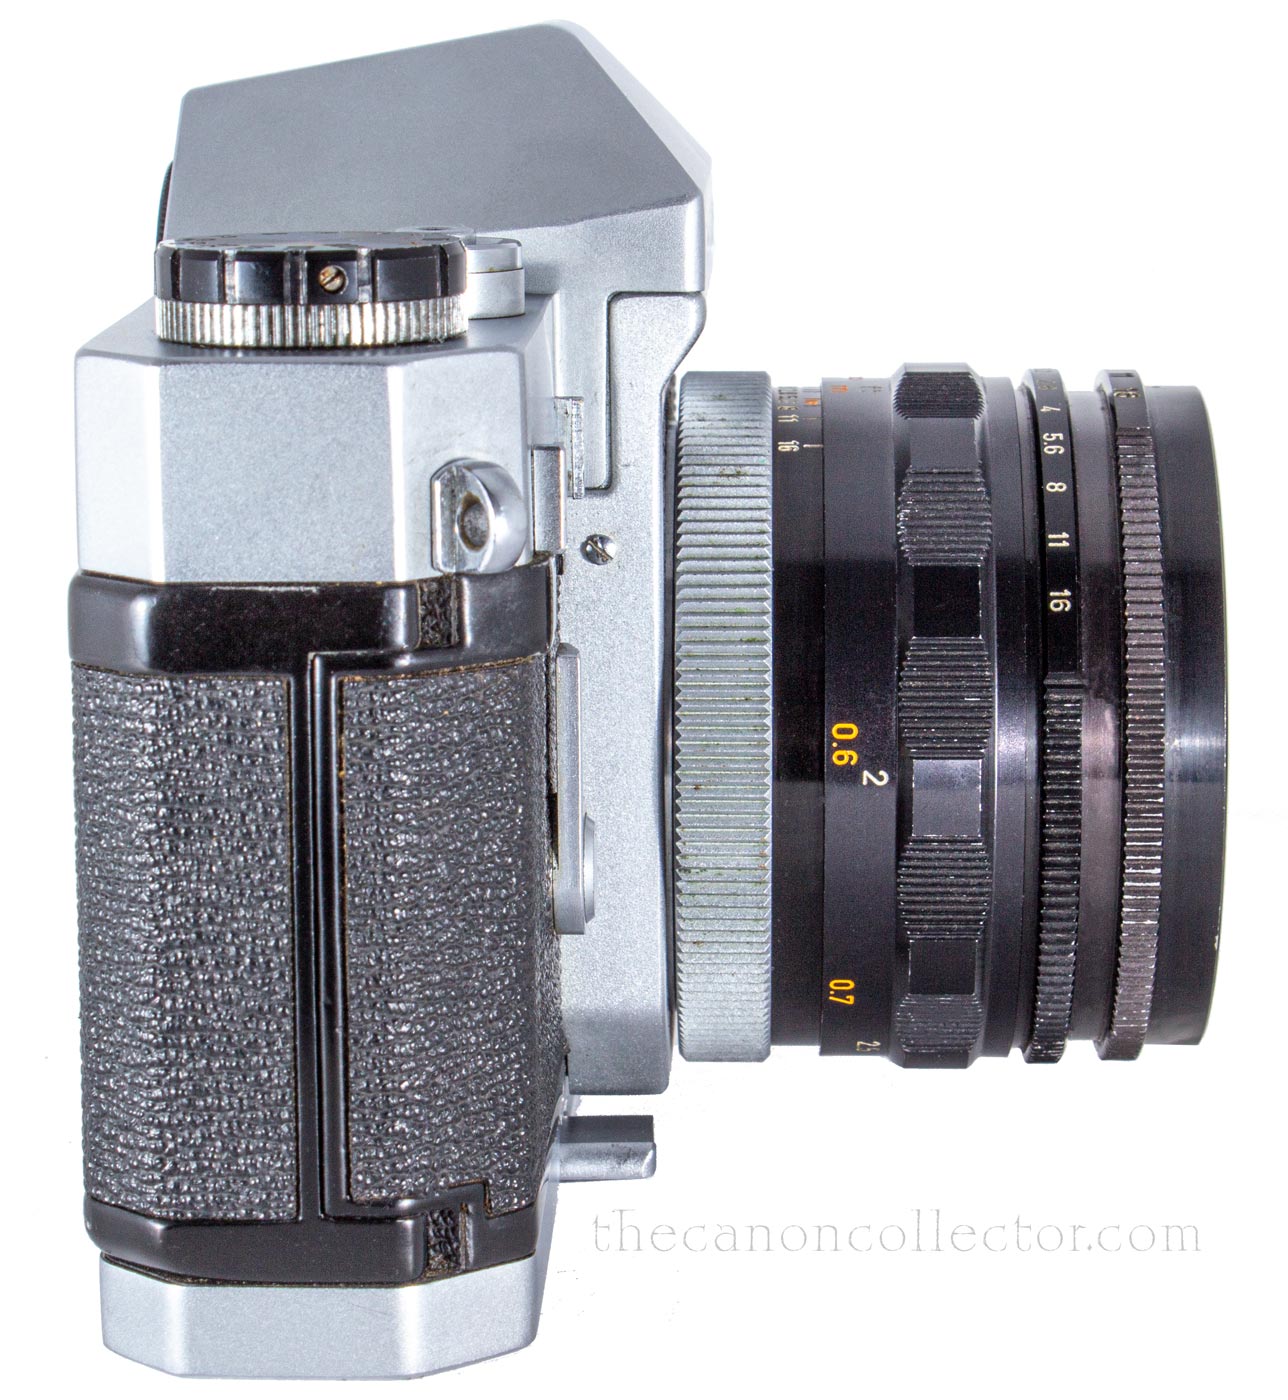 Canonflex RP Camera